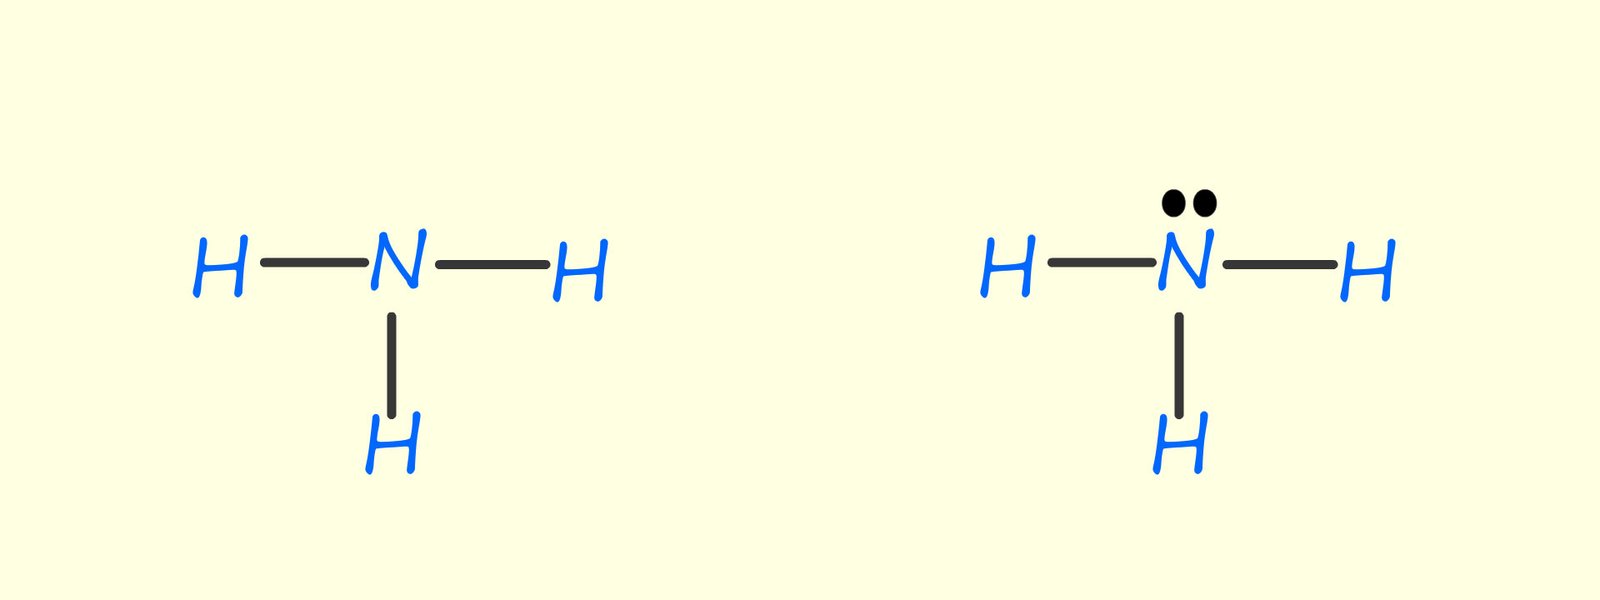 The displayed formula of an ammonia molecule